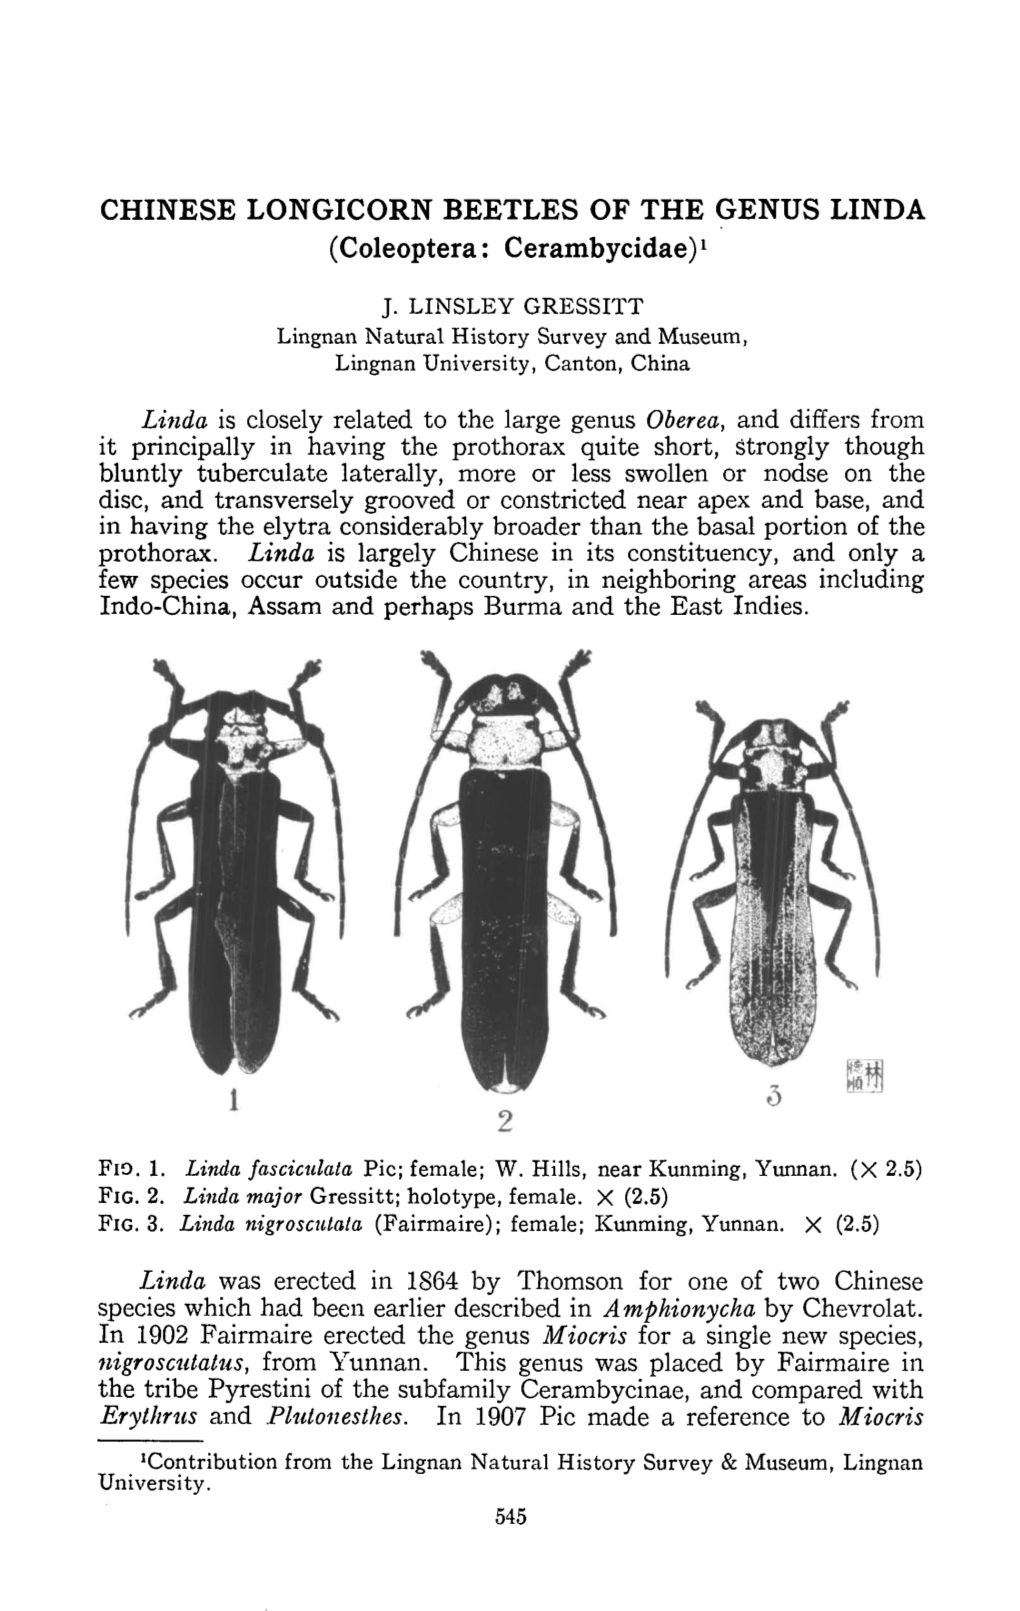 CHINESE LONGICORN BEETLES of the GENUS LINDA (Coleoptera: Cerambycidae)L